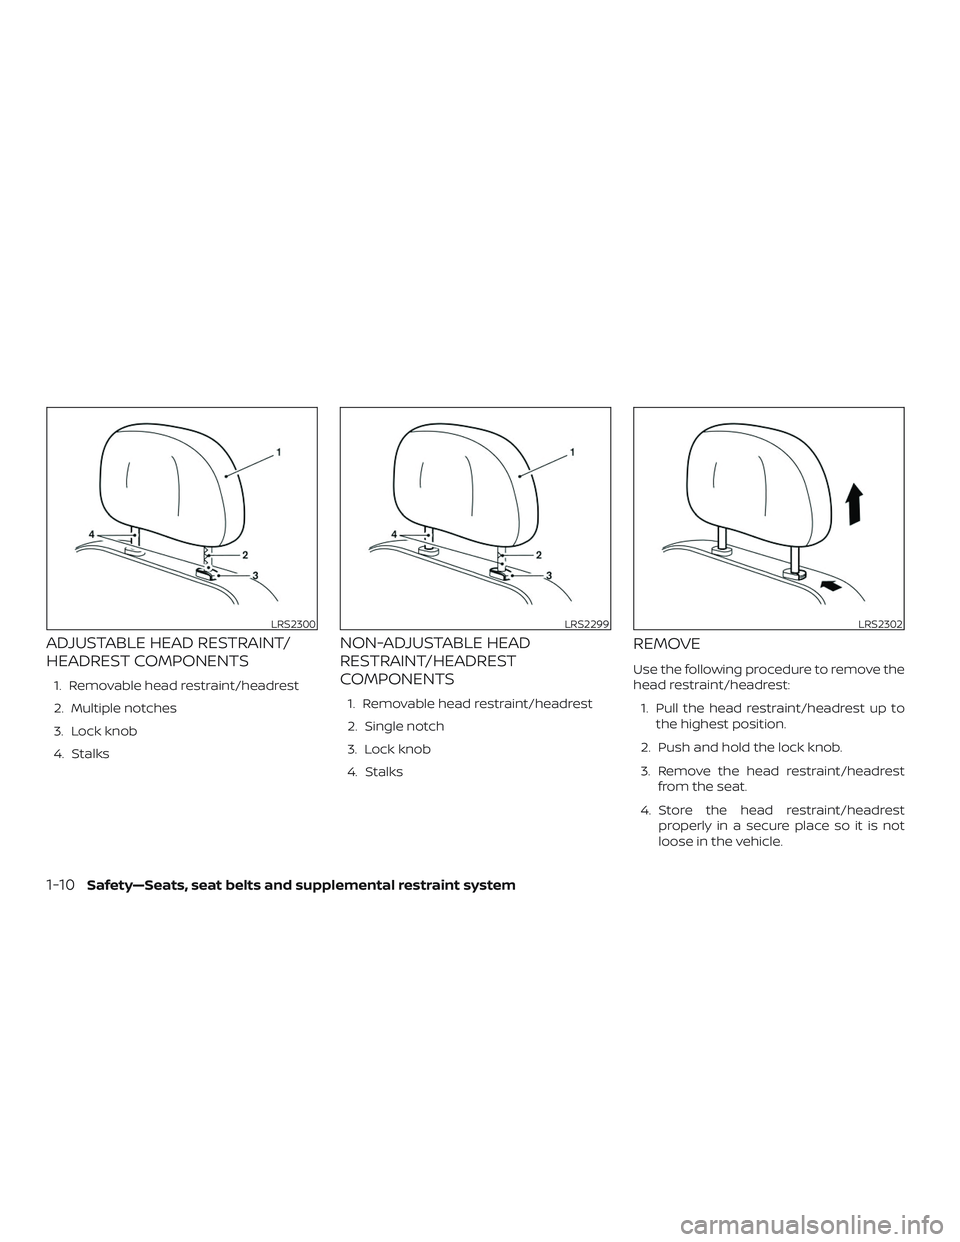 NISSAN MURANO 2019  Owner´s Manual ADJUSTABLE HEAD RESTRAINT/
HEADREST COMPONENTS
1. Removable head restraint/headrest
2. Multiple notches
3. Lock knob
4. Stalks
NON-ADJUSTABLE HEAD
RESTRAINT/HEADREST
COMPONENTS
1. Removable head restr